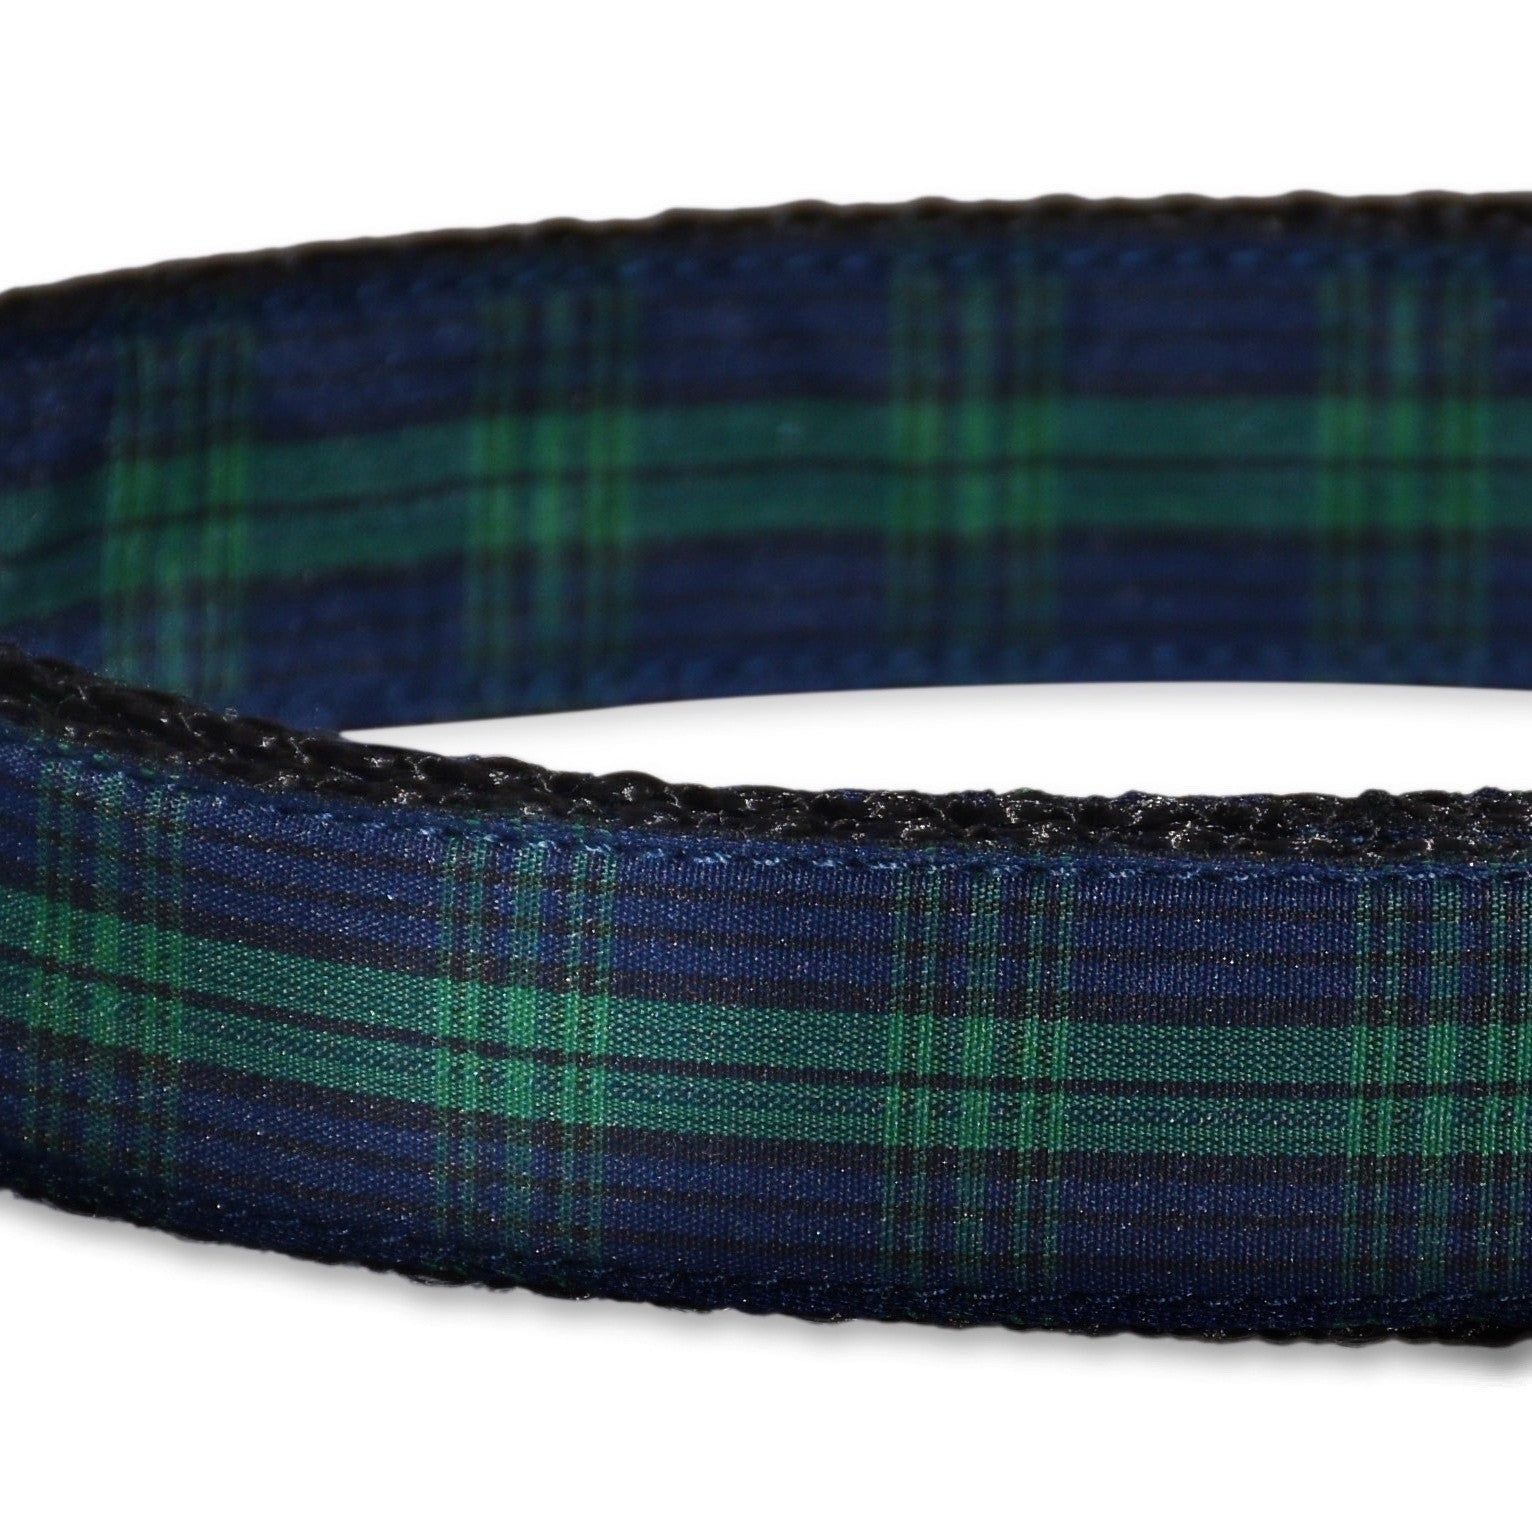 KONA CAVE ® - adjustable size dog collar in authentic Blackwatch tartan (blue/green)